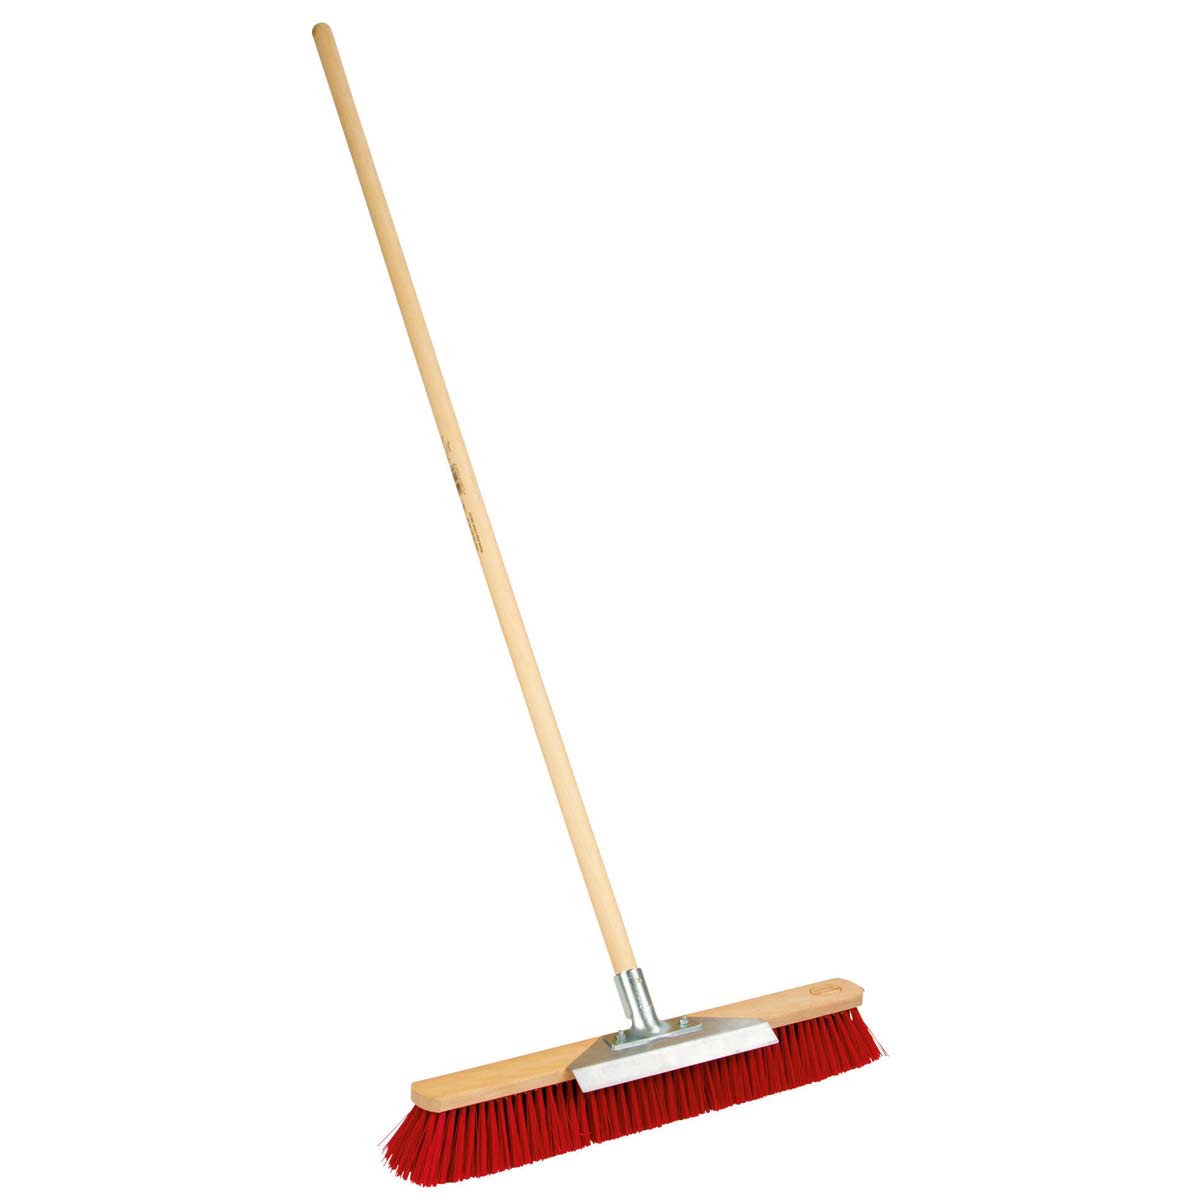 Large broom with scraper edge